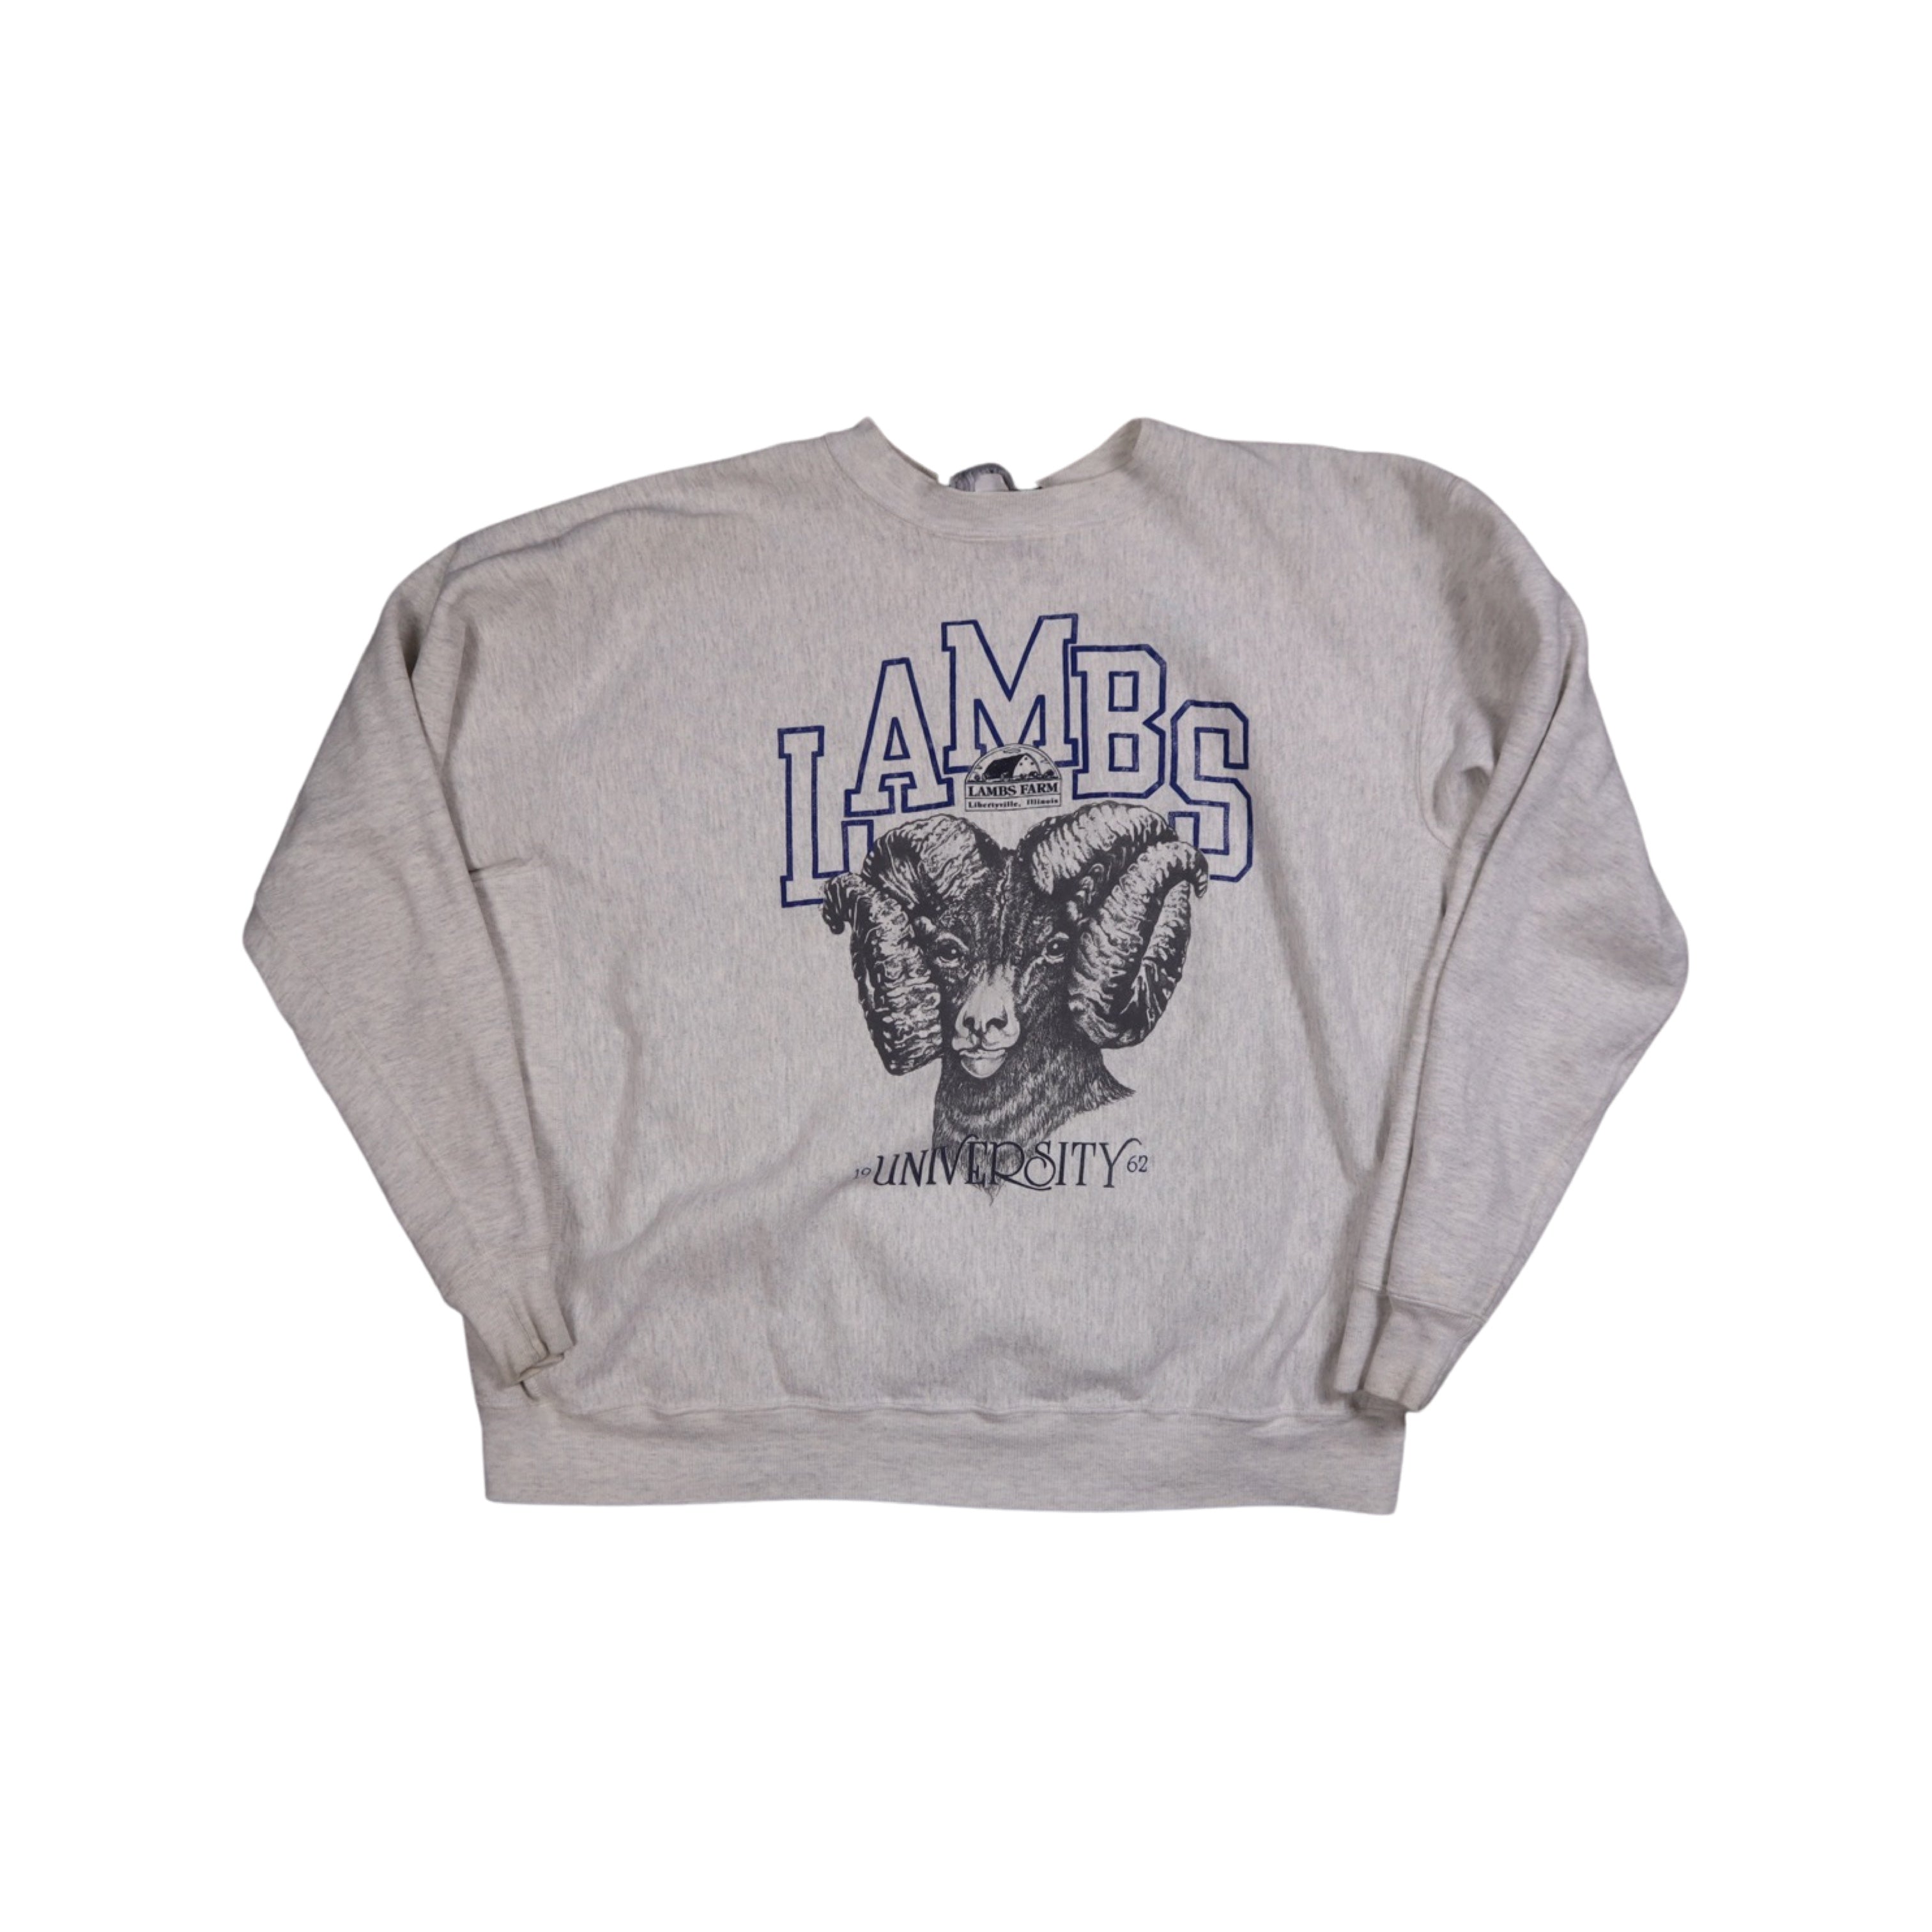 Lambs Farm University 90s Sweater (XL)